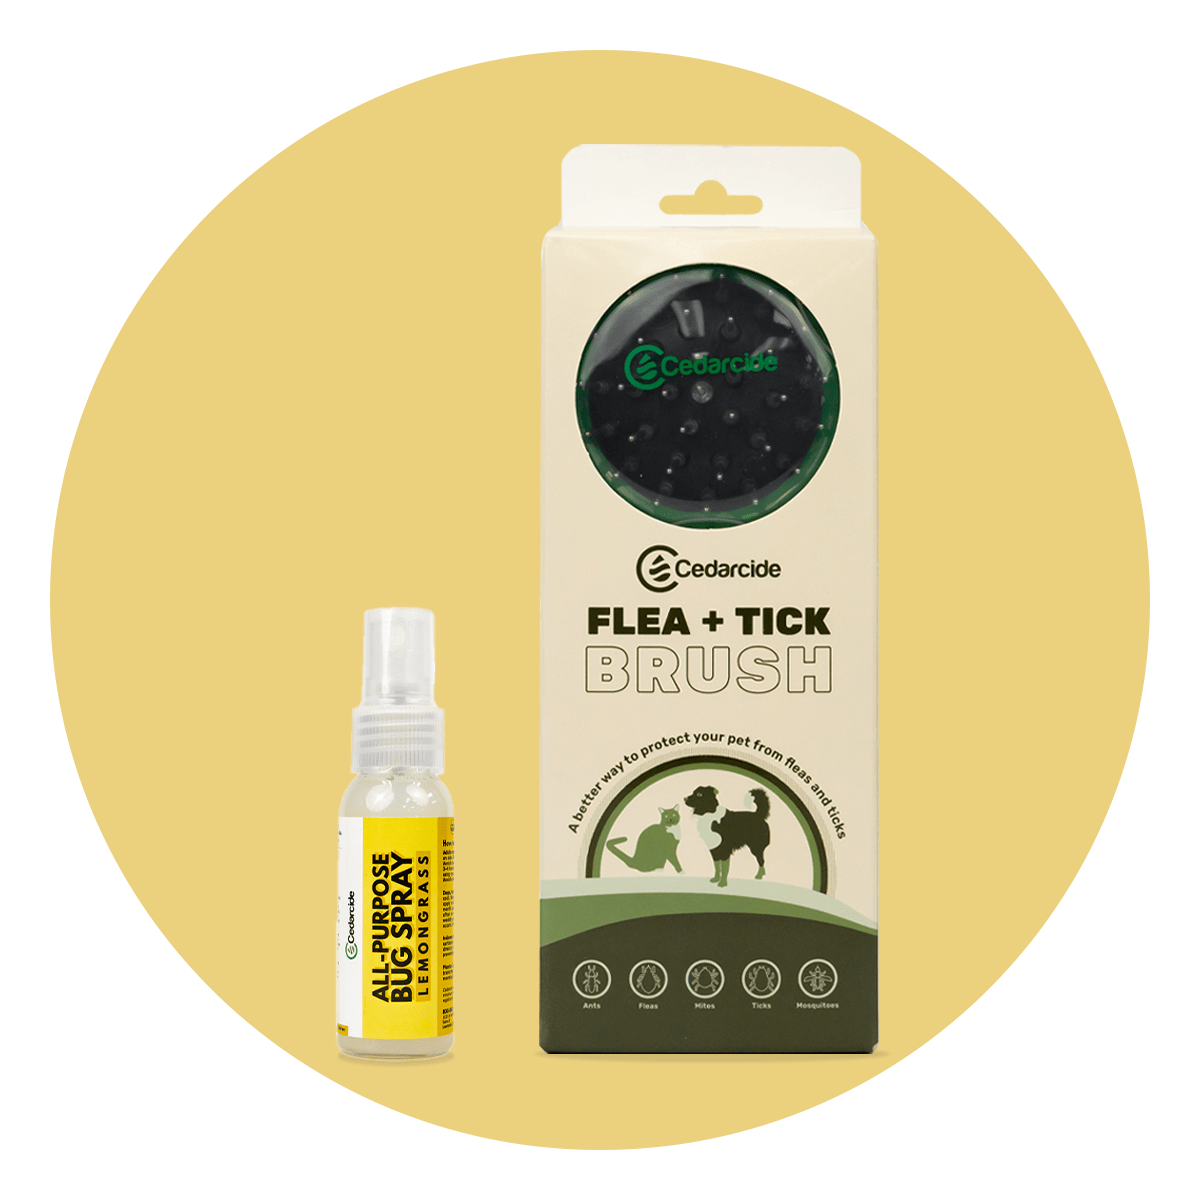 Flea and tick prevention brush